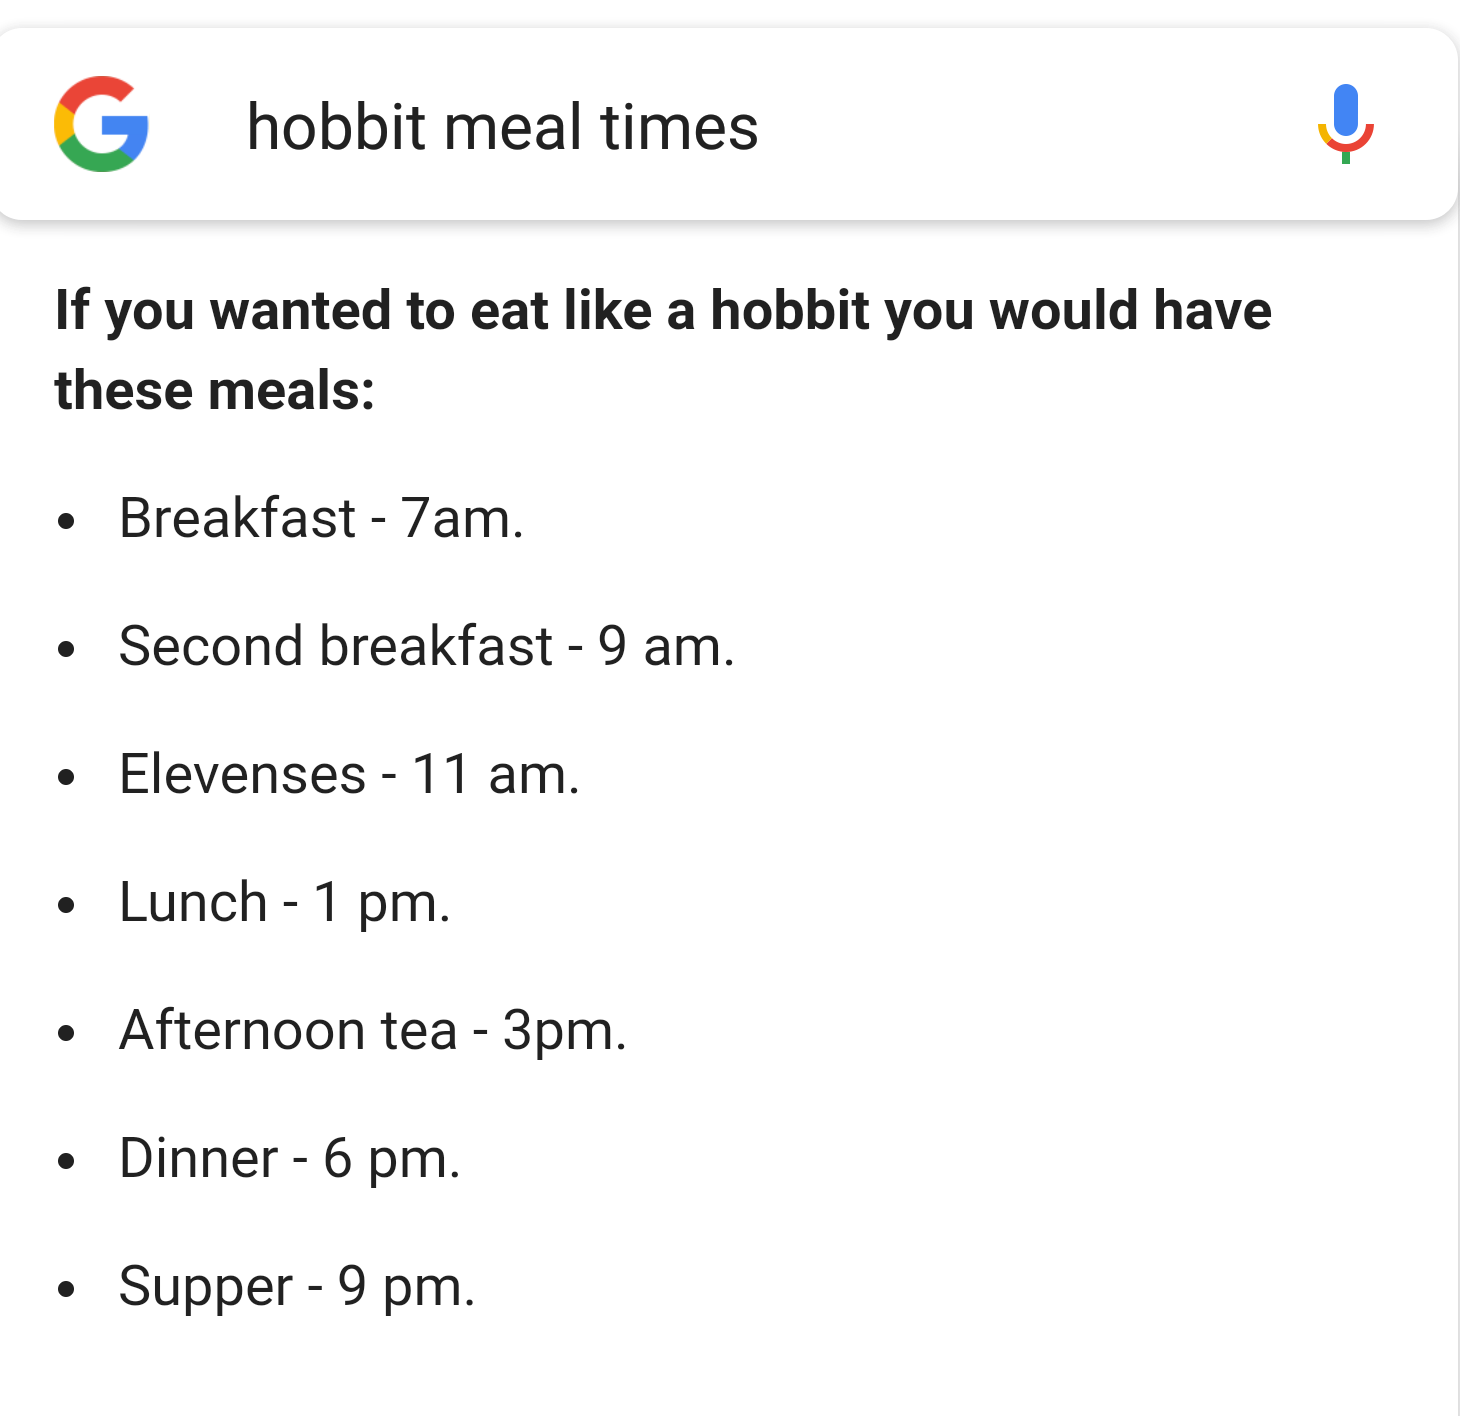 Google tells you Hobbit meal times.